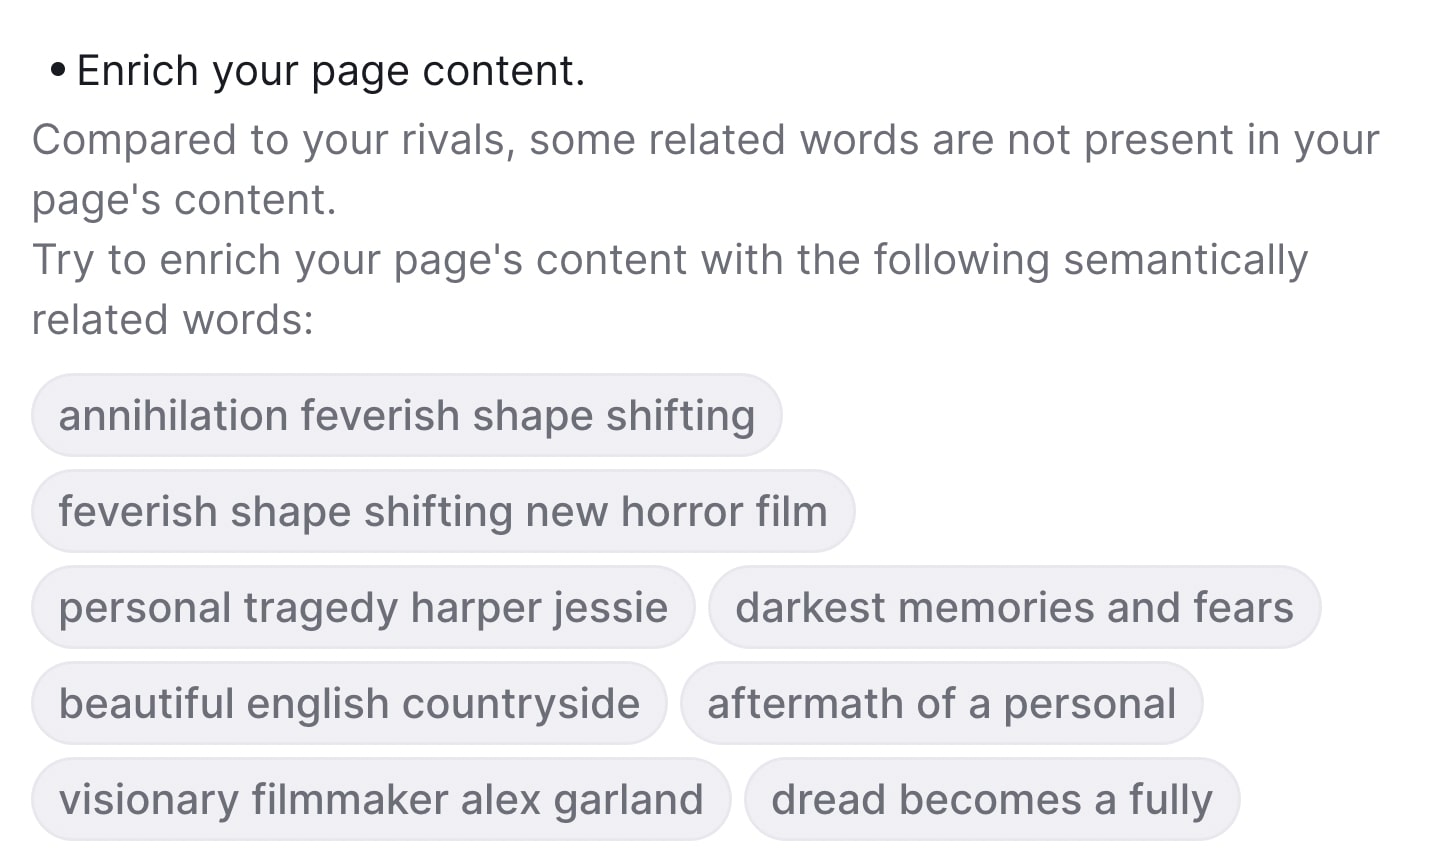 "Enrich your page content" ideas section